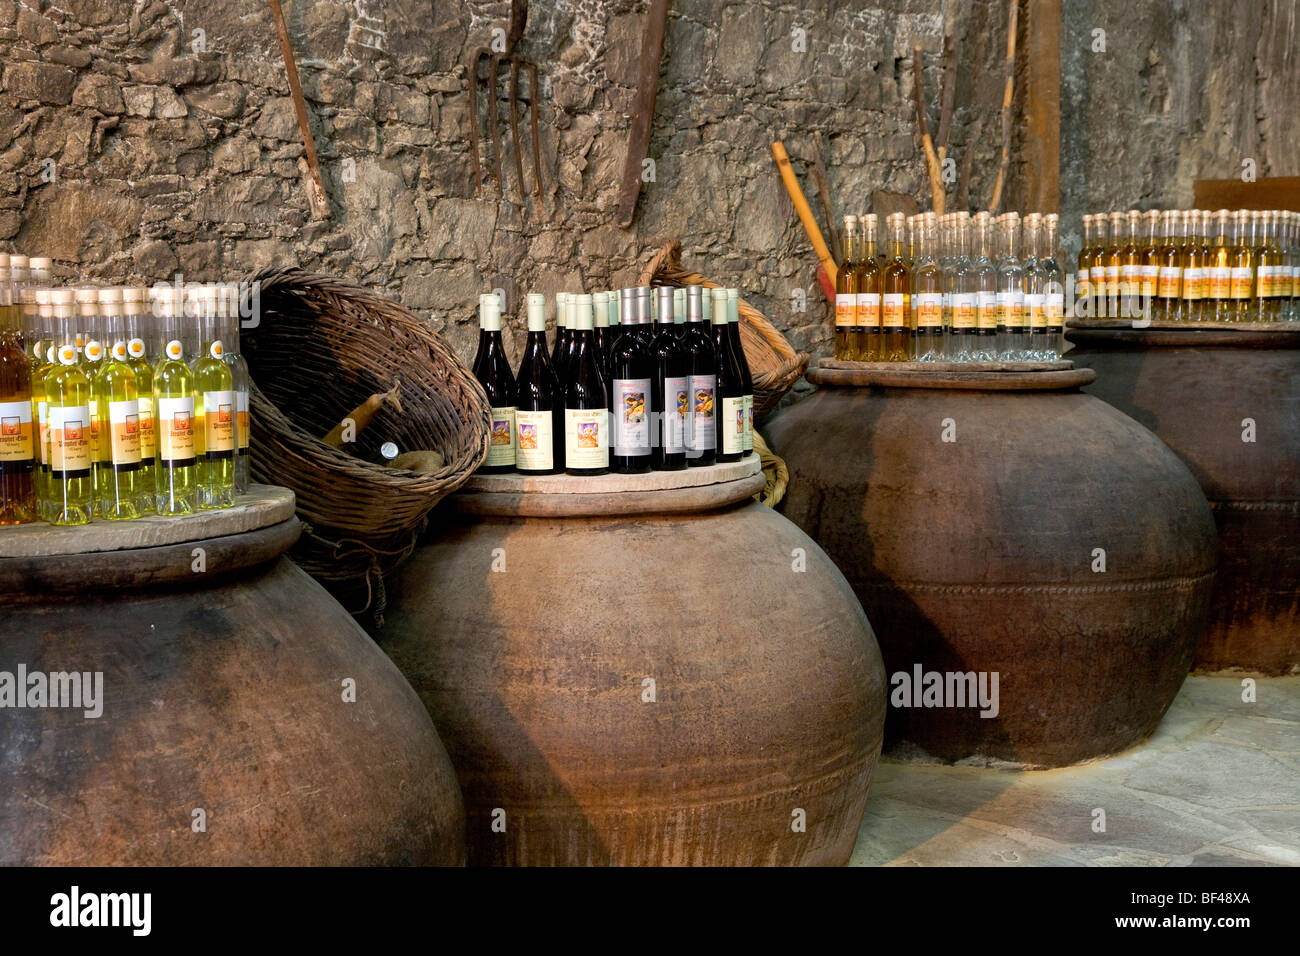 Wine cellar, barrels, wine, Cyprus, Greece, Europe Stock Photo